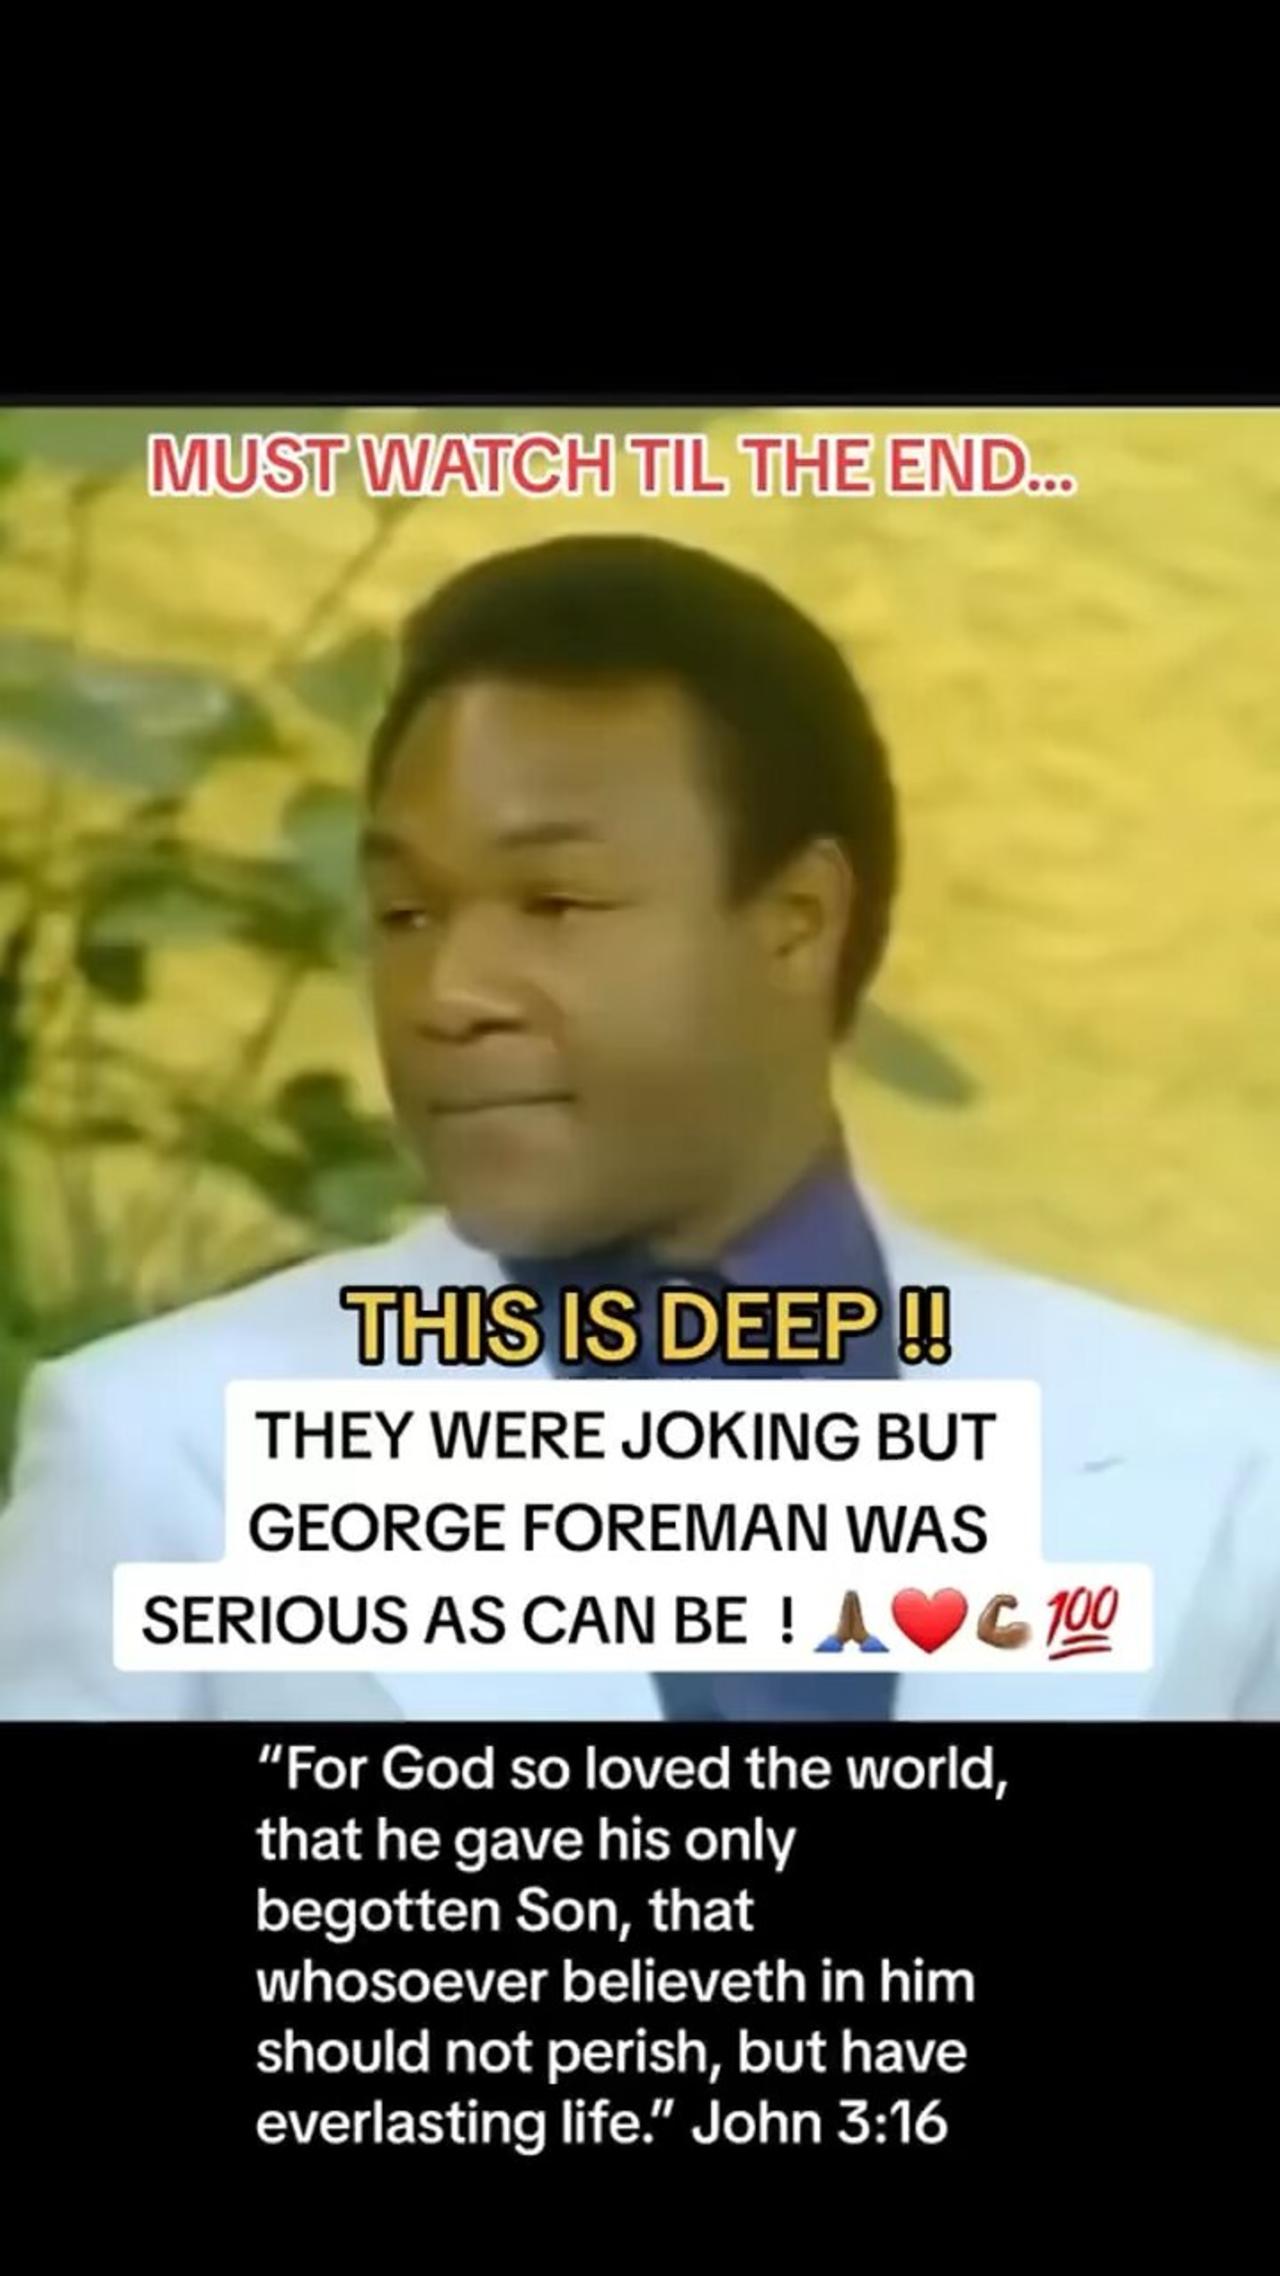 George Foreman’s testimony